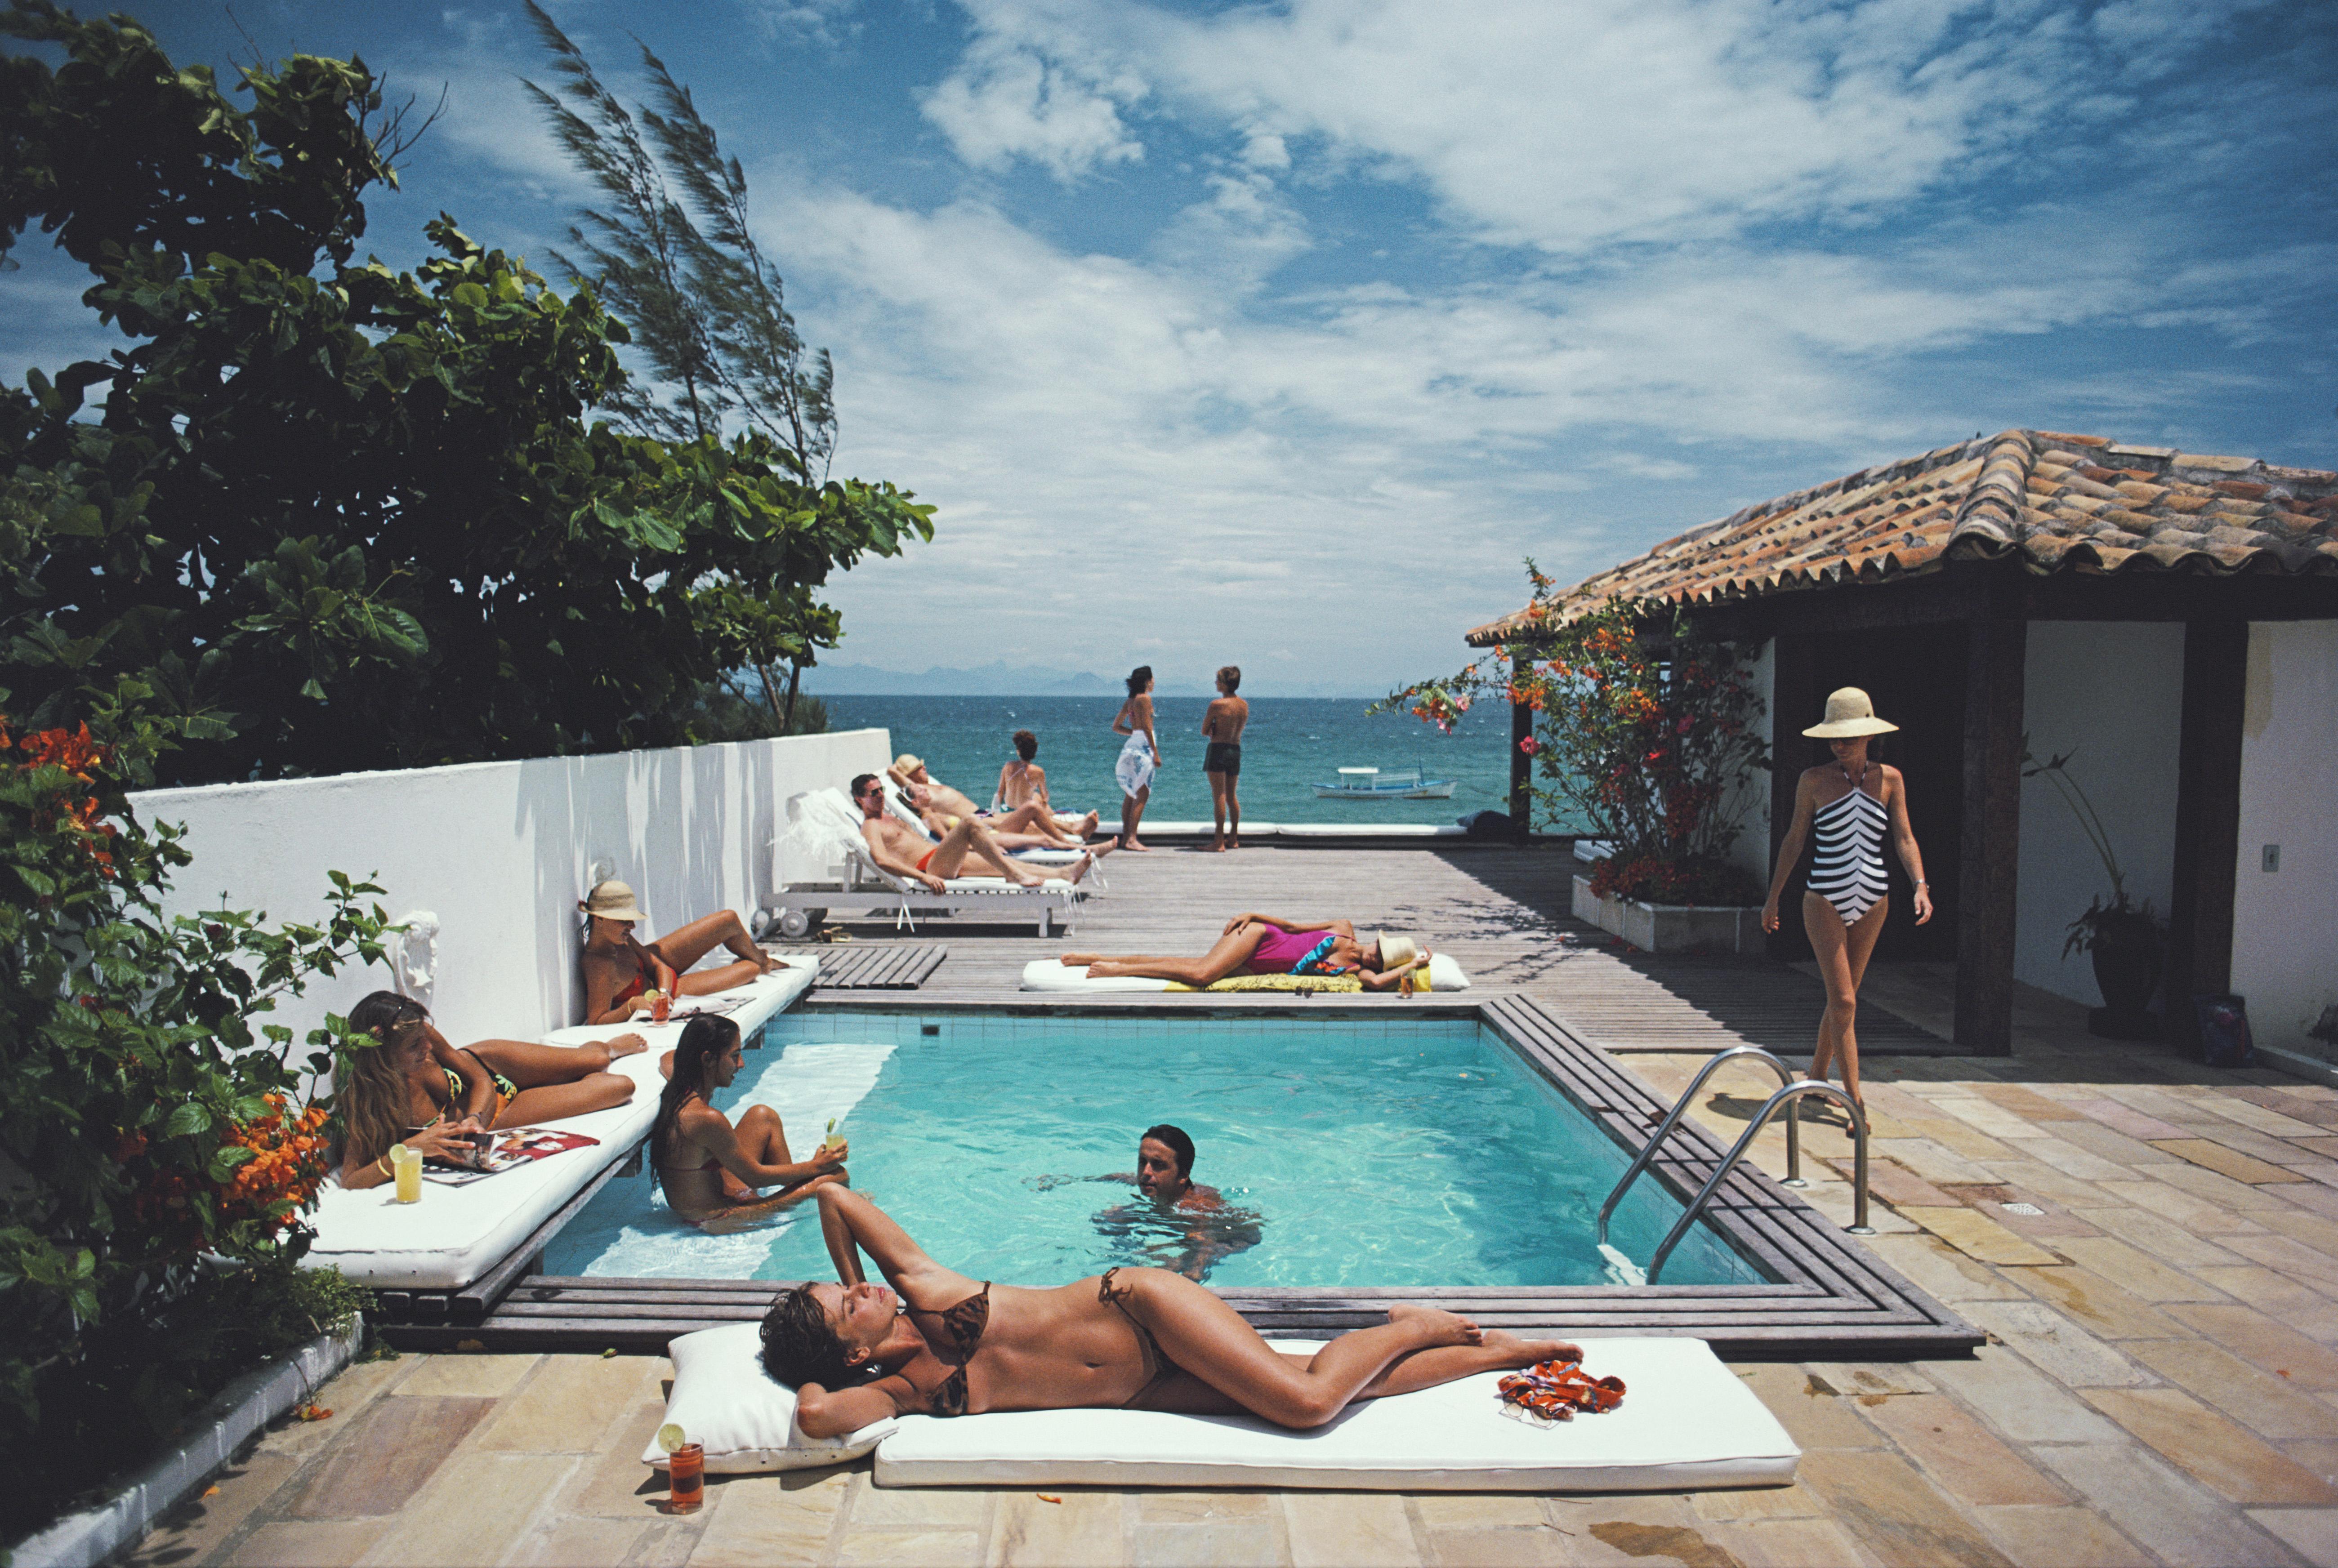 Slim Aarons Landscape Photograph - Armacao dos Buzios, Brazil, Estate Edition Photograph (Sunbathers, Ocean, Pool)